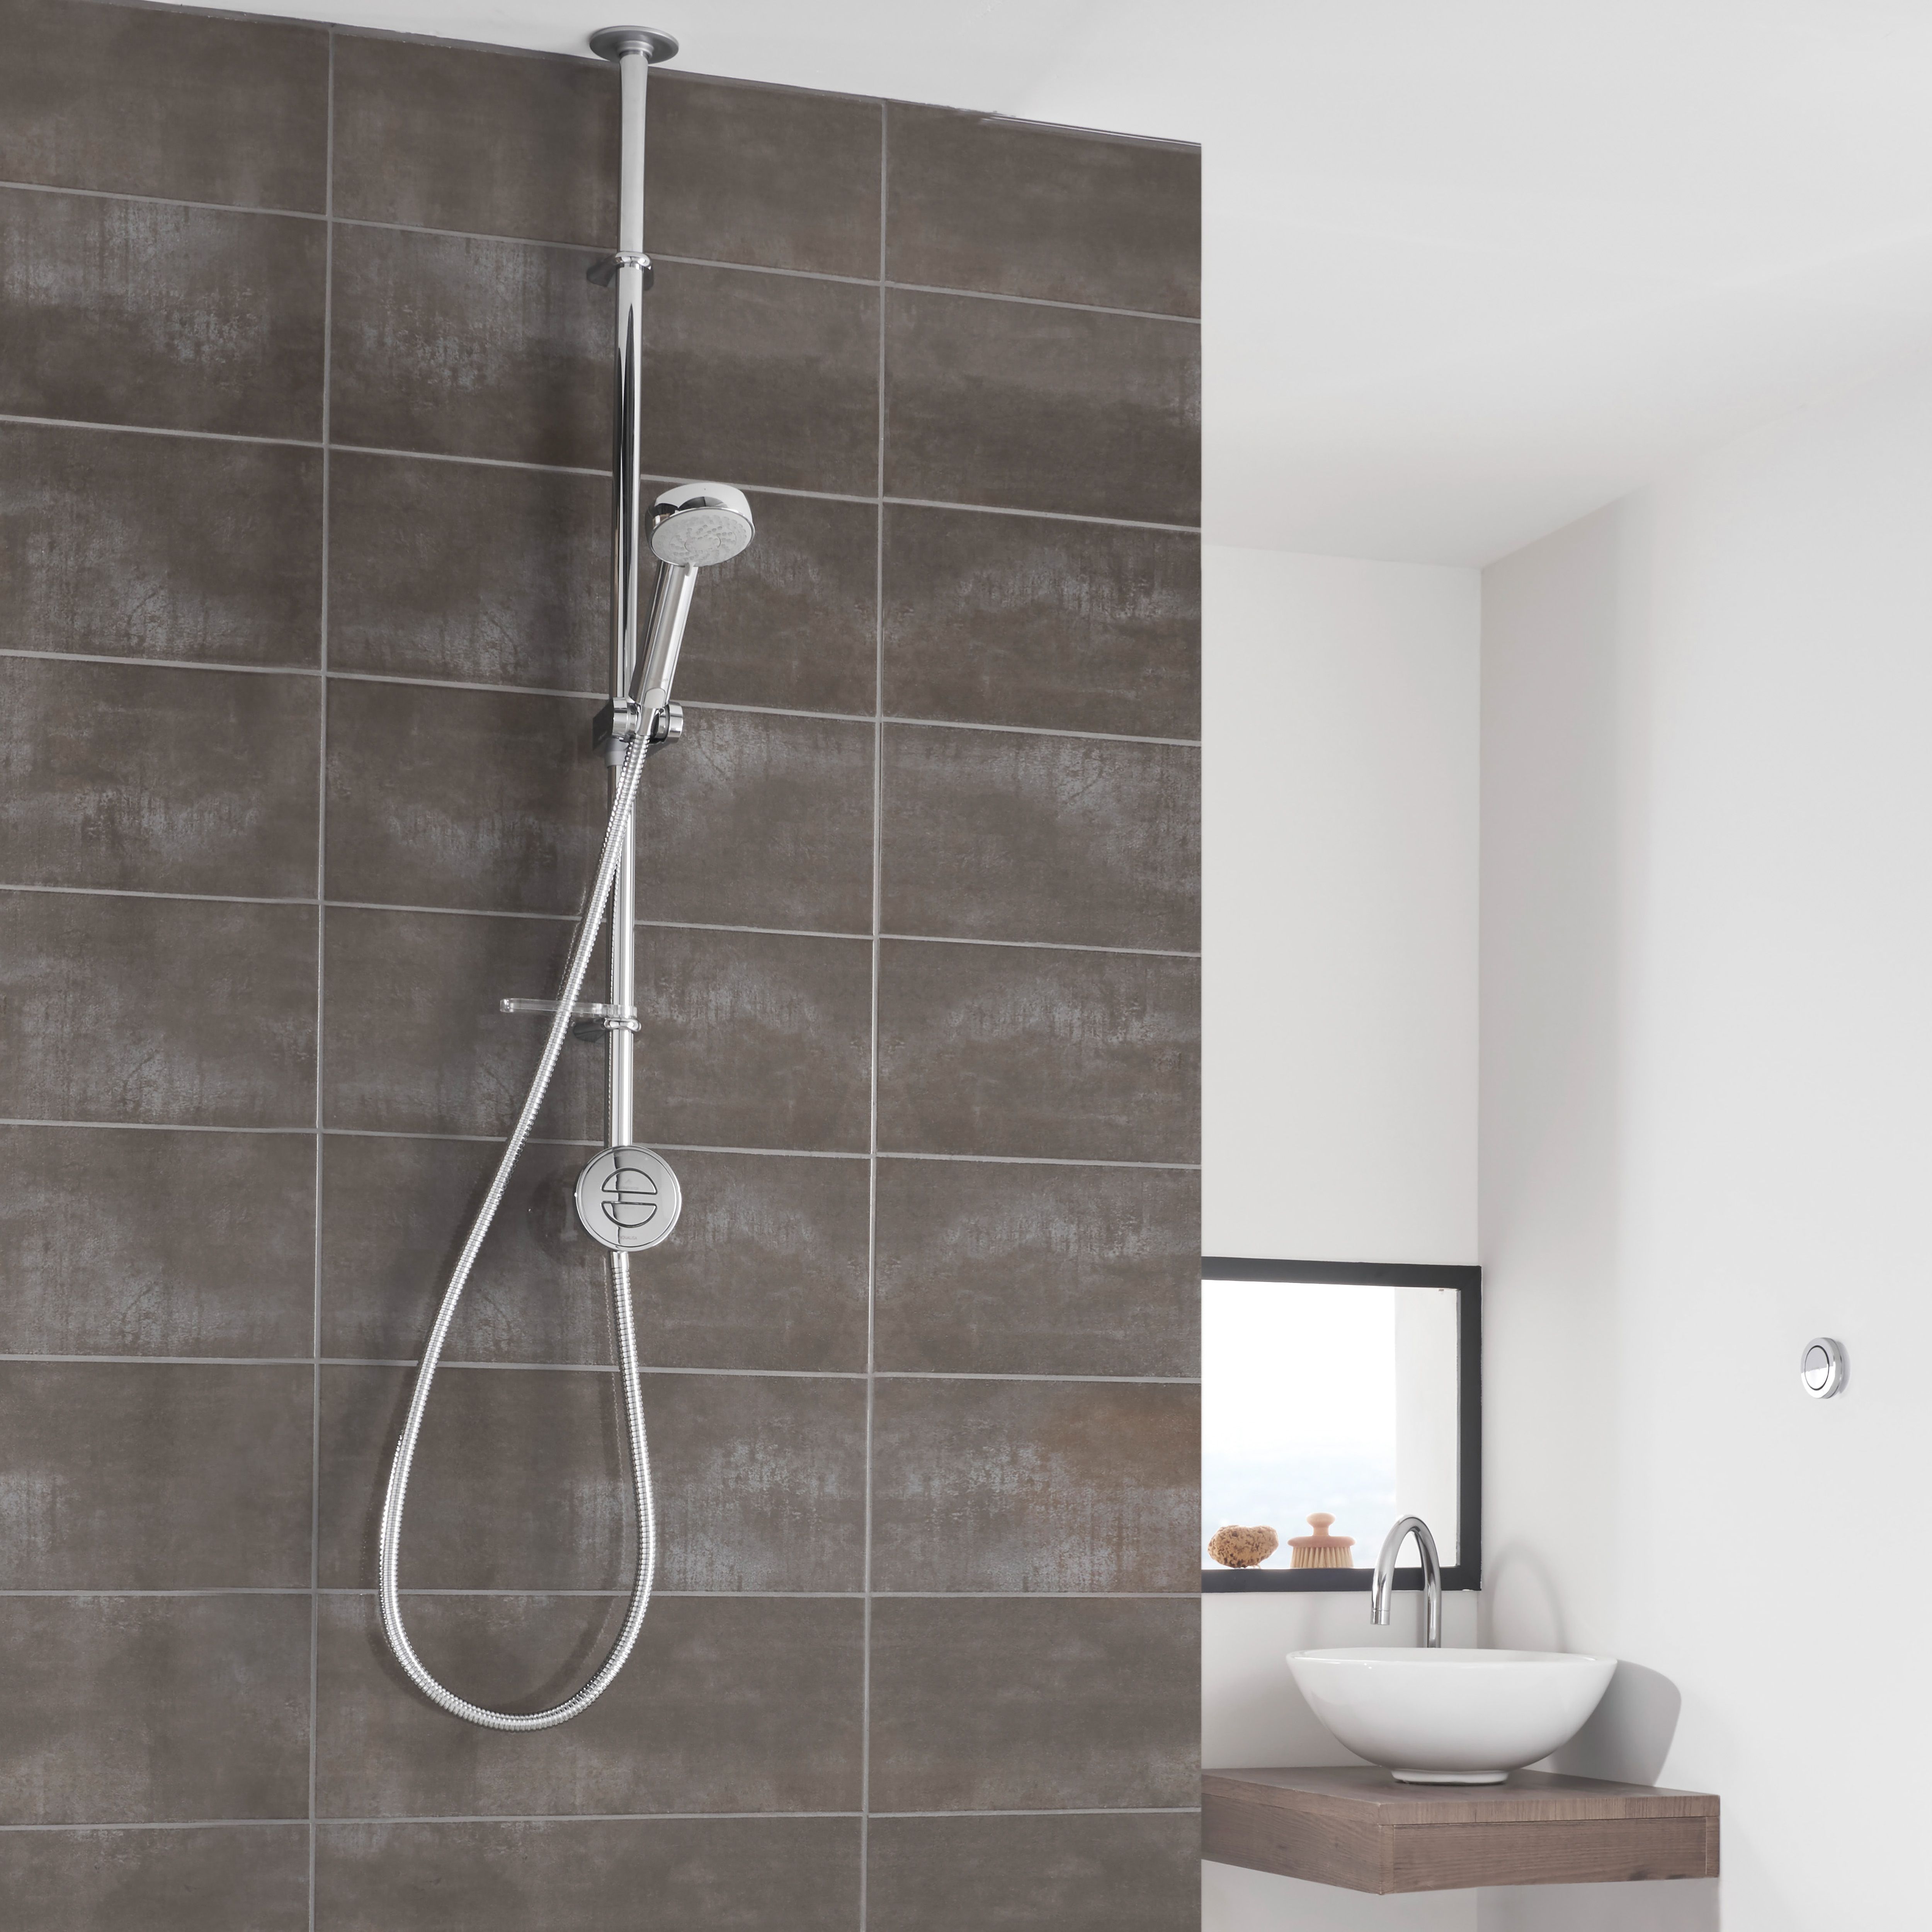 Aqualisa Smart Link Exposed valve HP/Combi Ceiling fed Smart Digital Shower with Adjustable